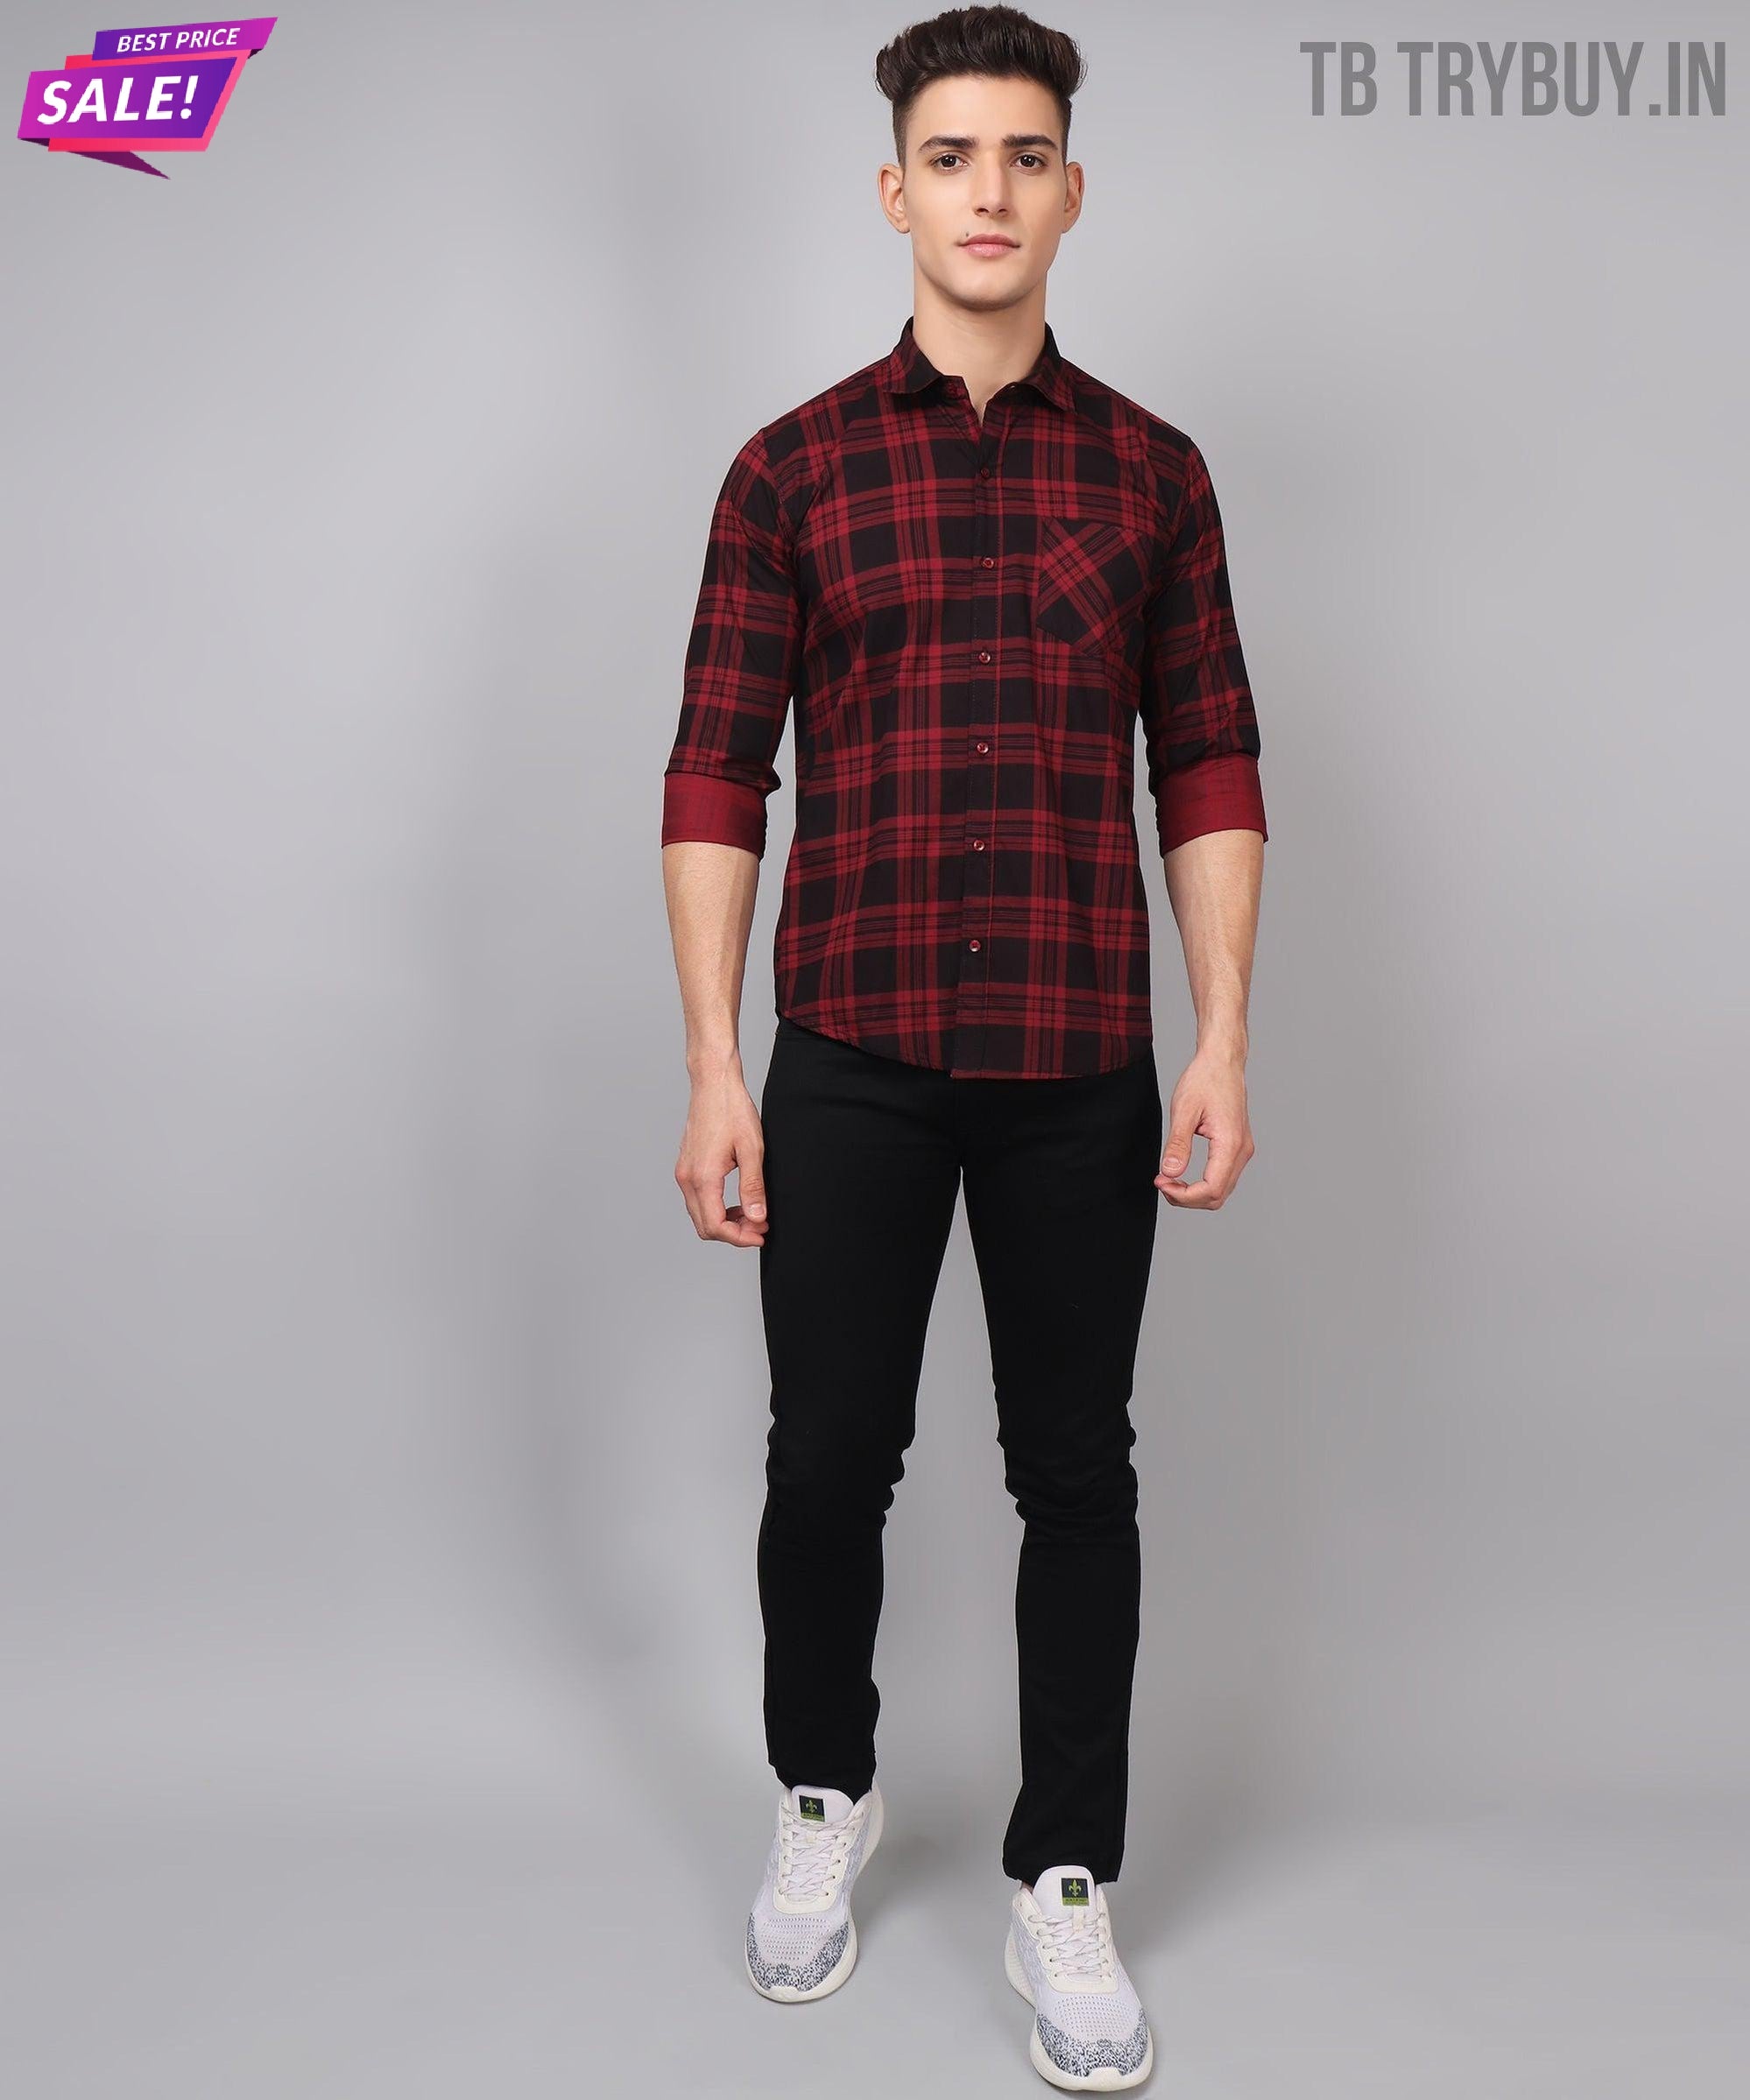 TryBuy Premium Red Black Checks Shirts for Men